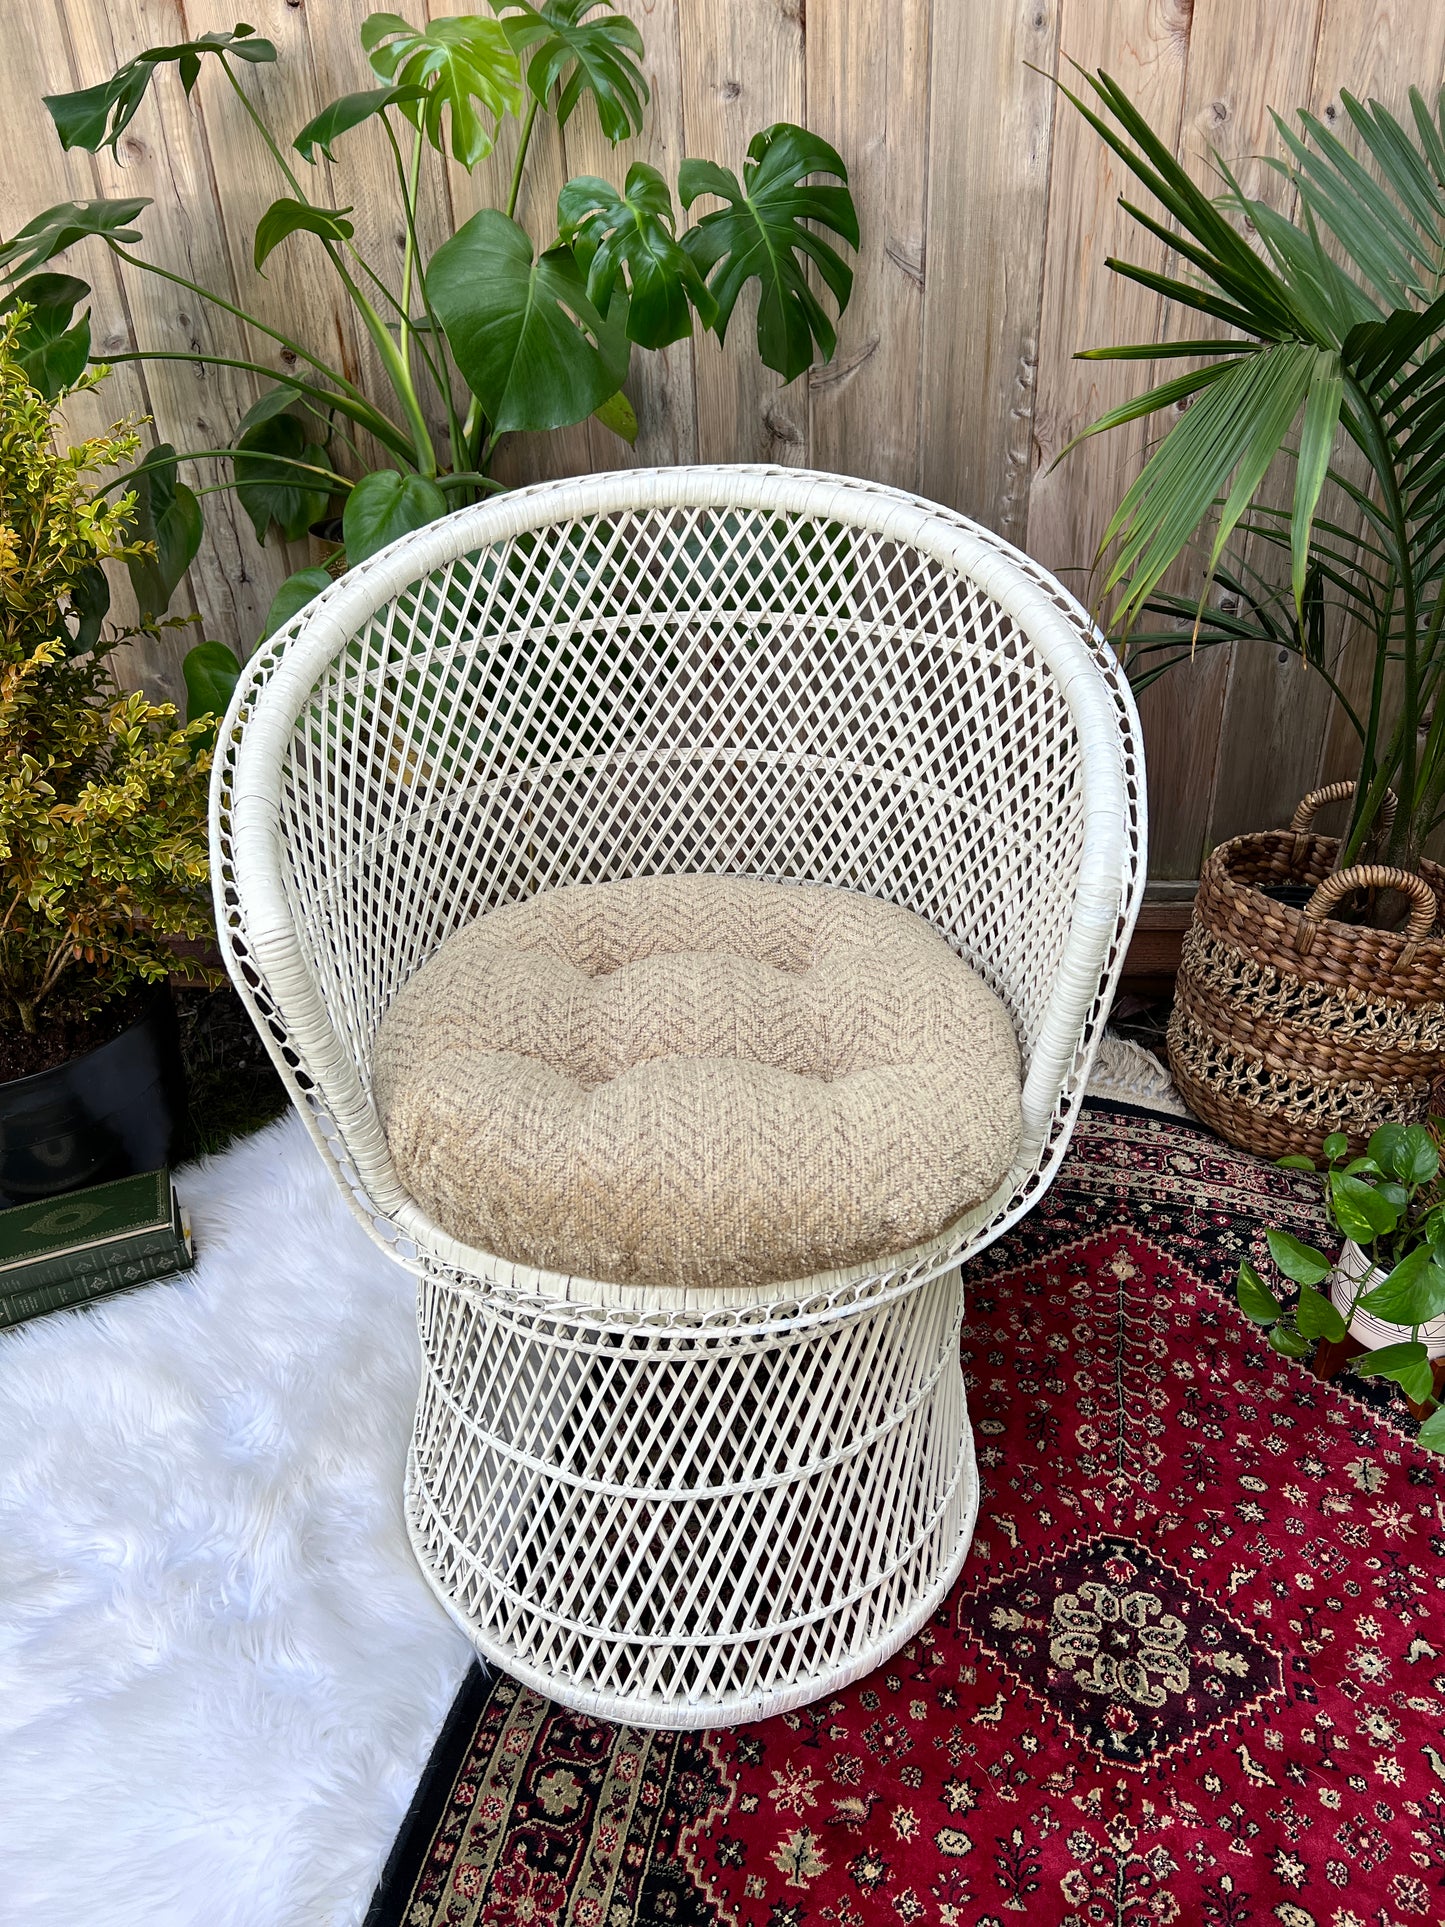 The White Peacock Chair